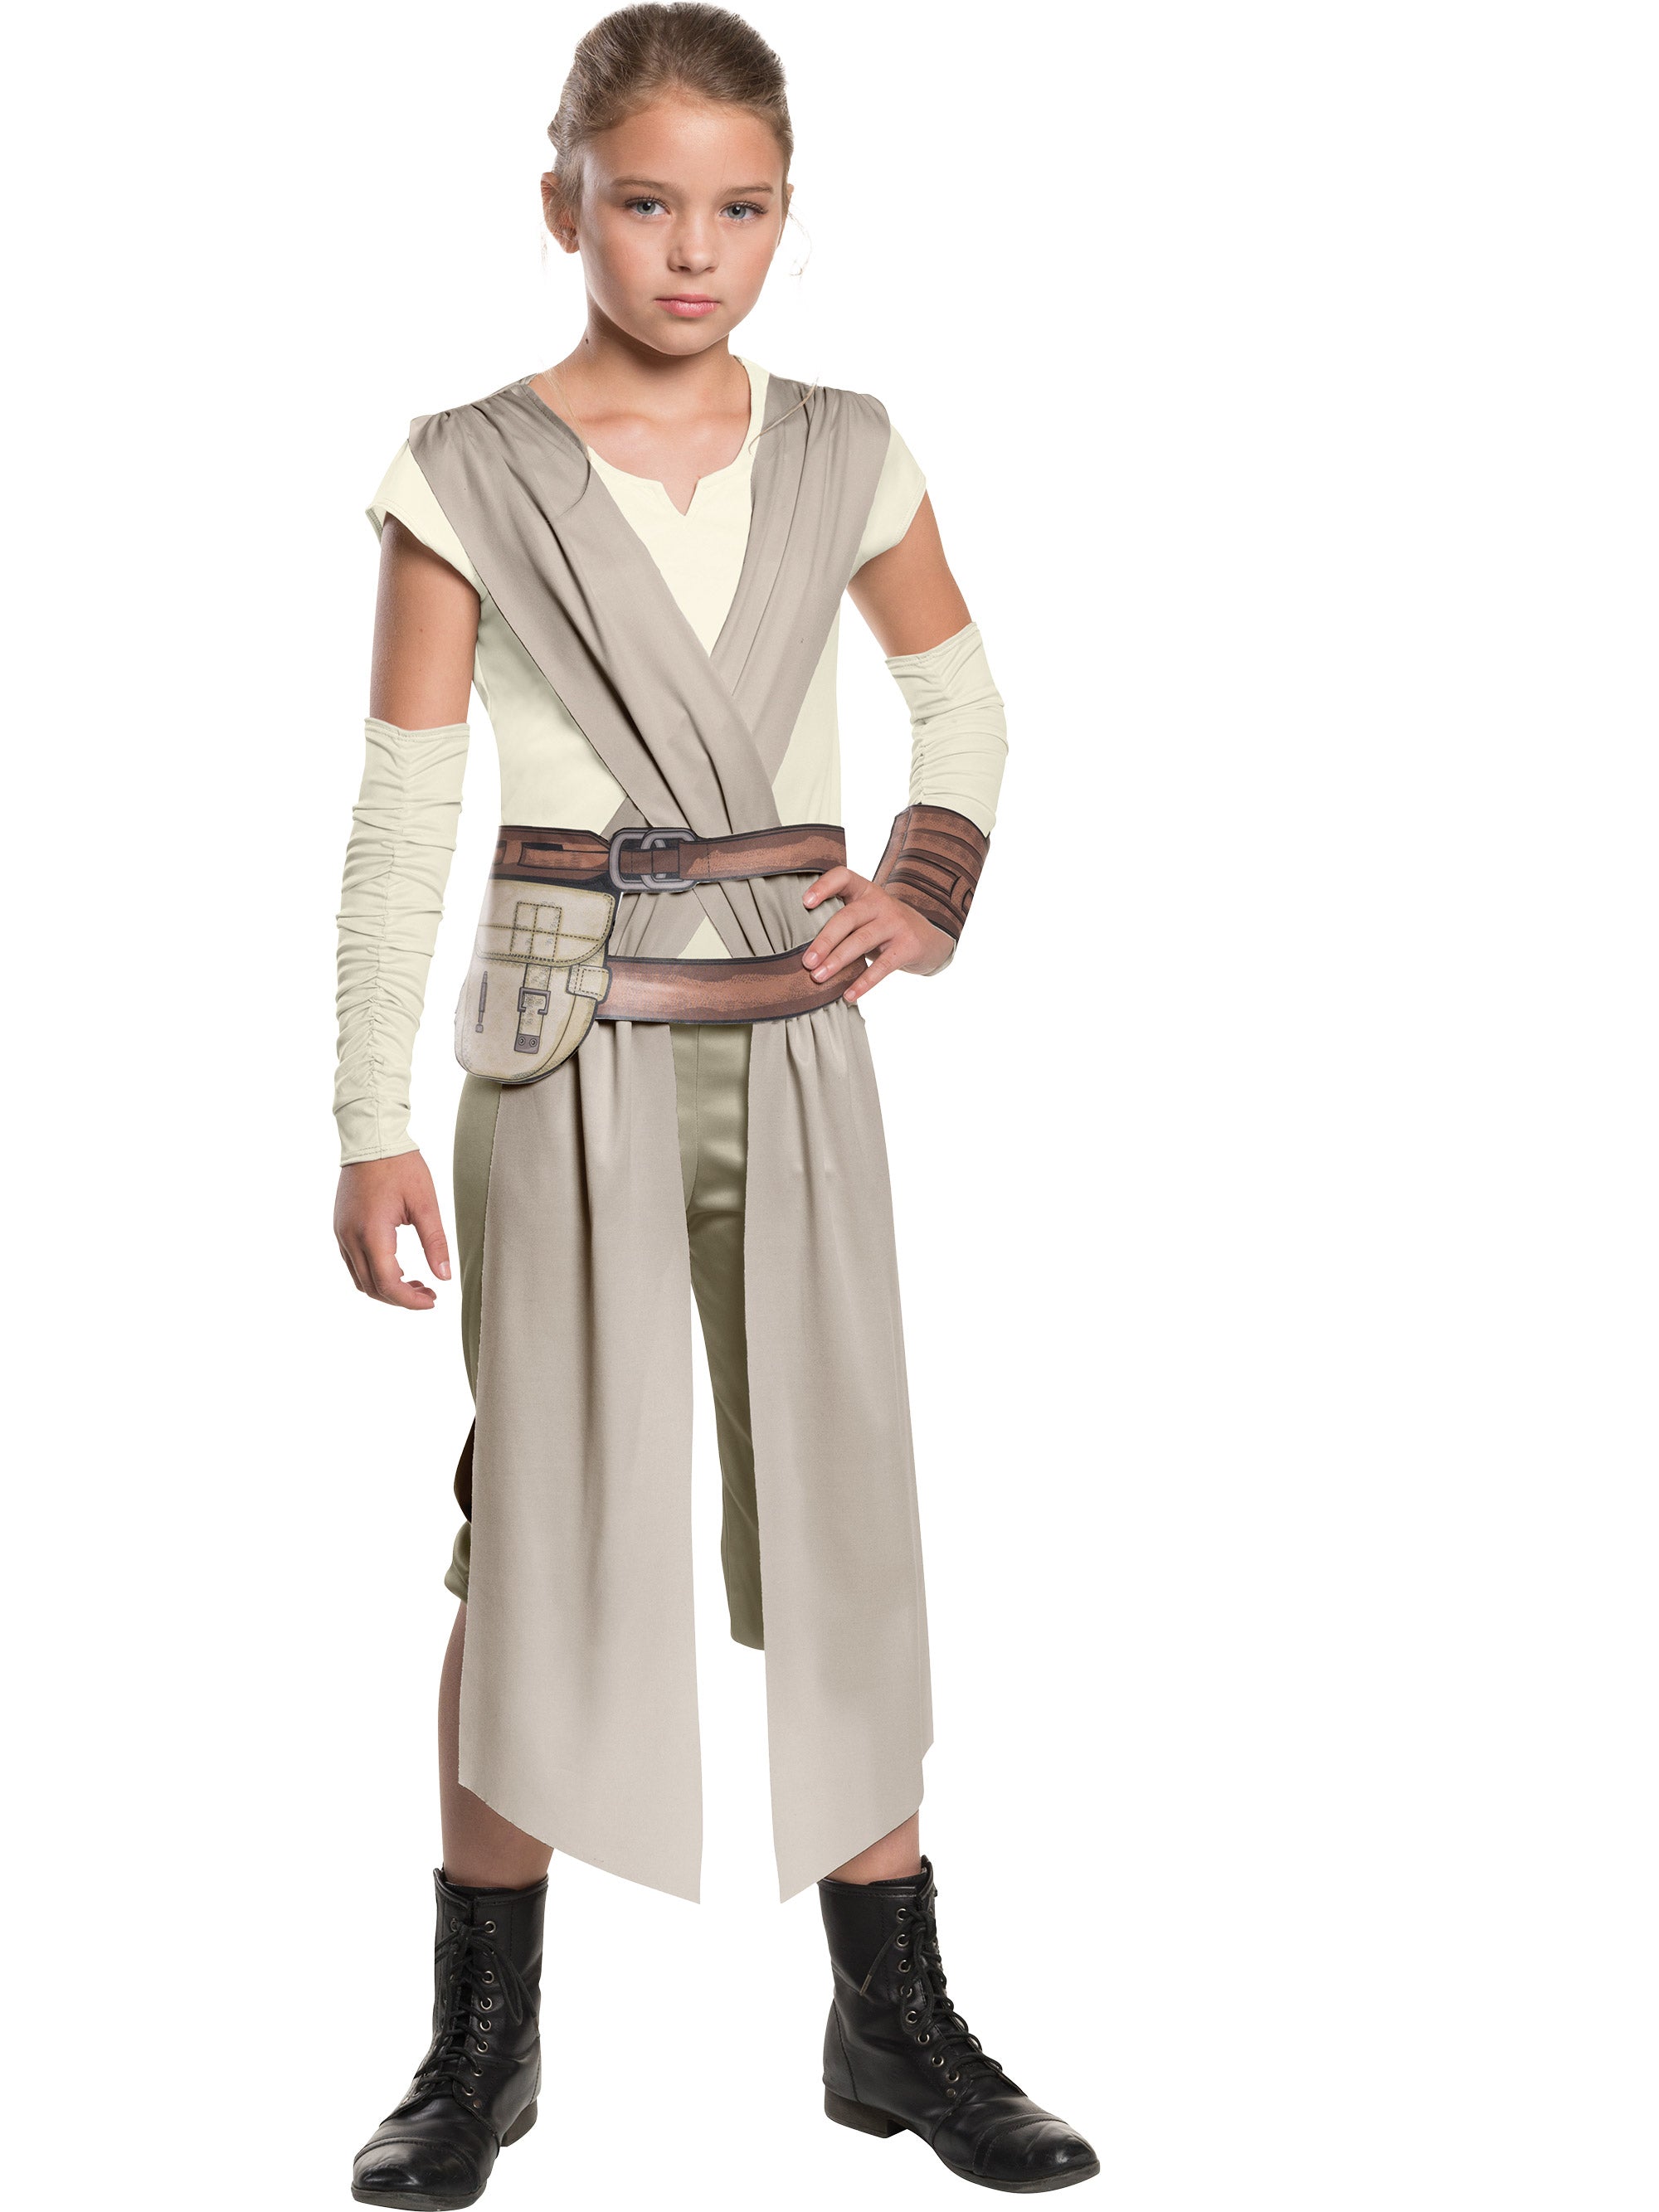 Star Wars Episode VII Rey Child Costume - costumes.com